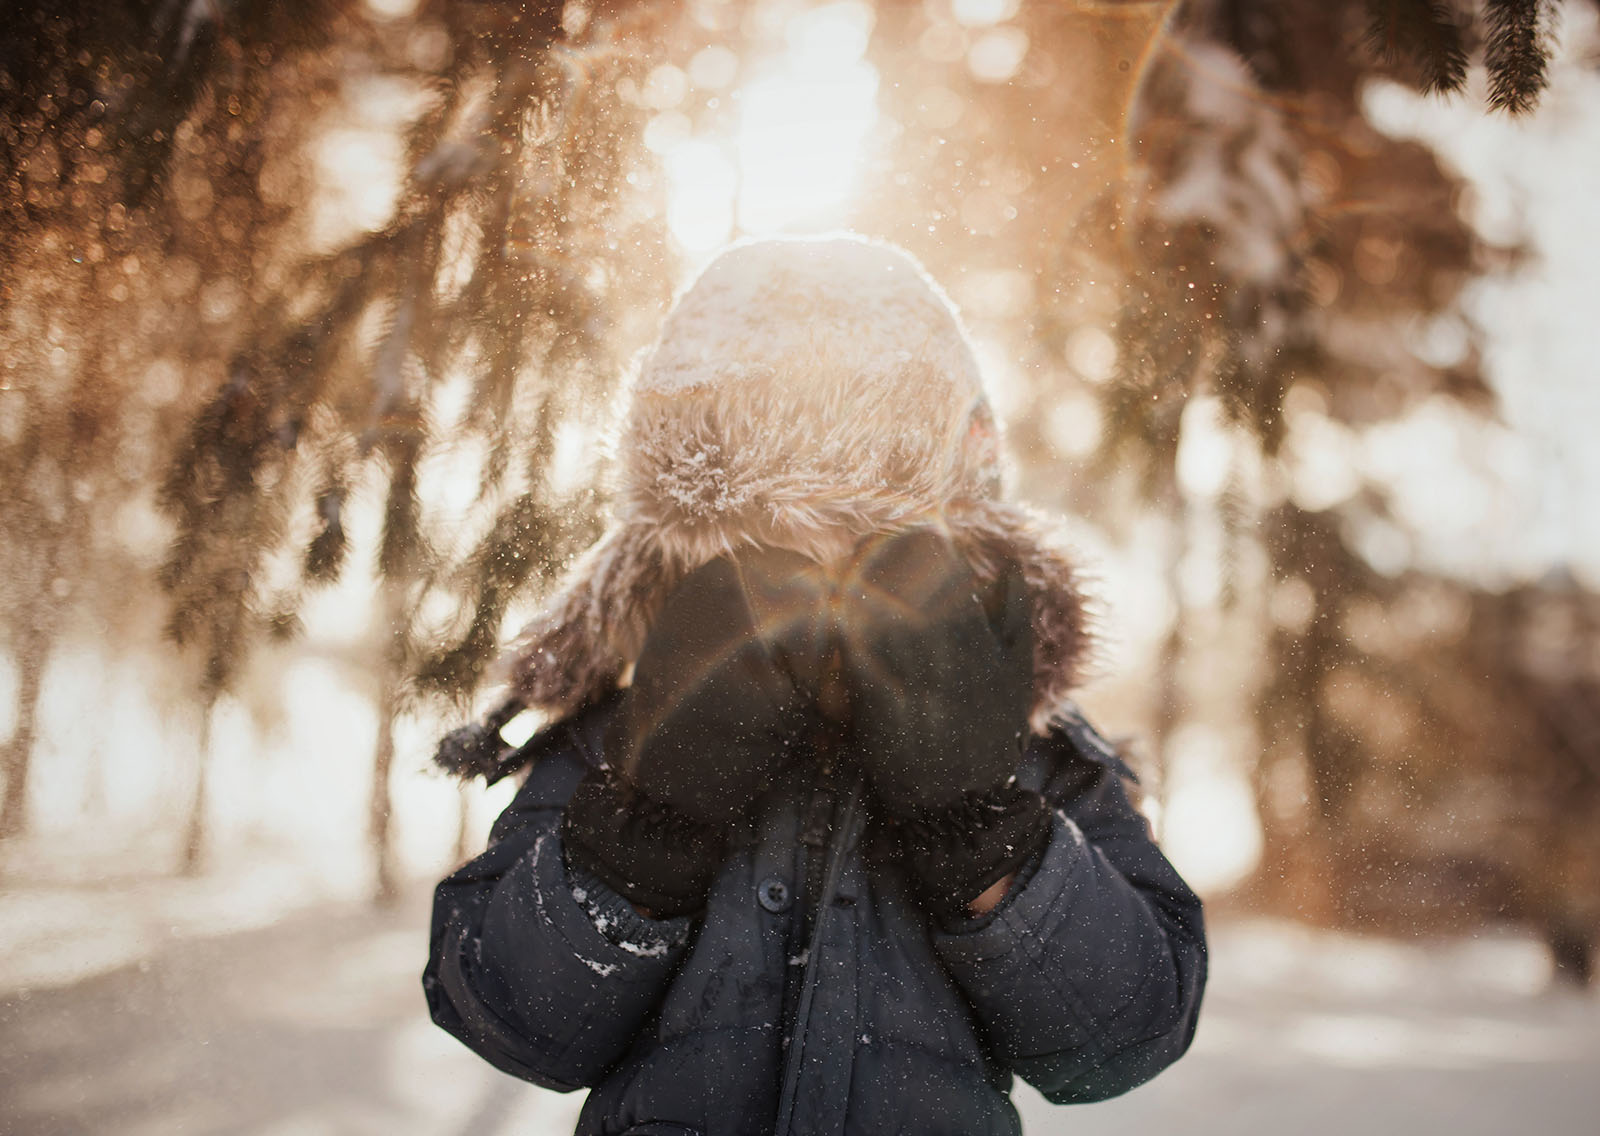 backlit pic of snow falling on boy by Meg Loeks